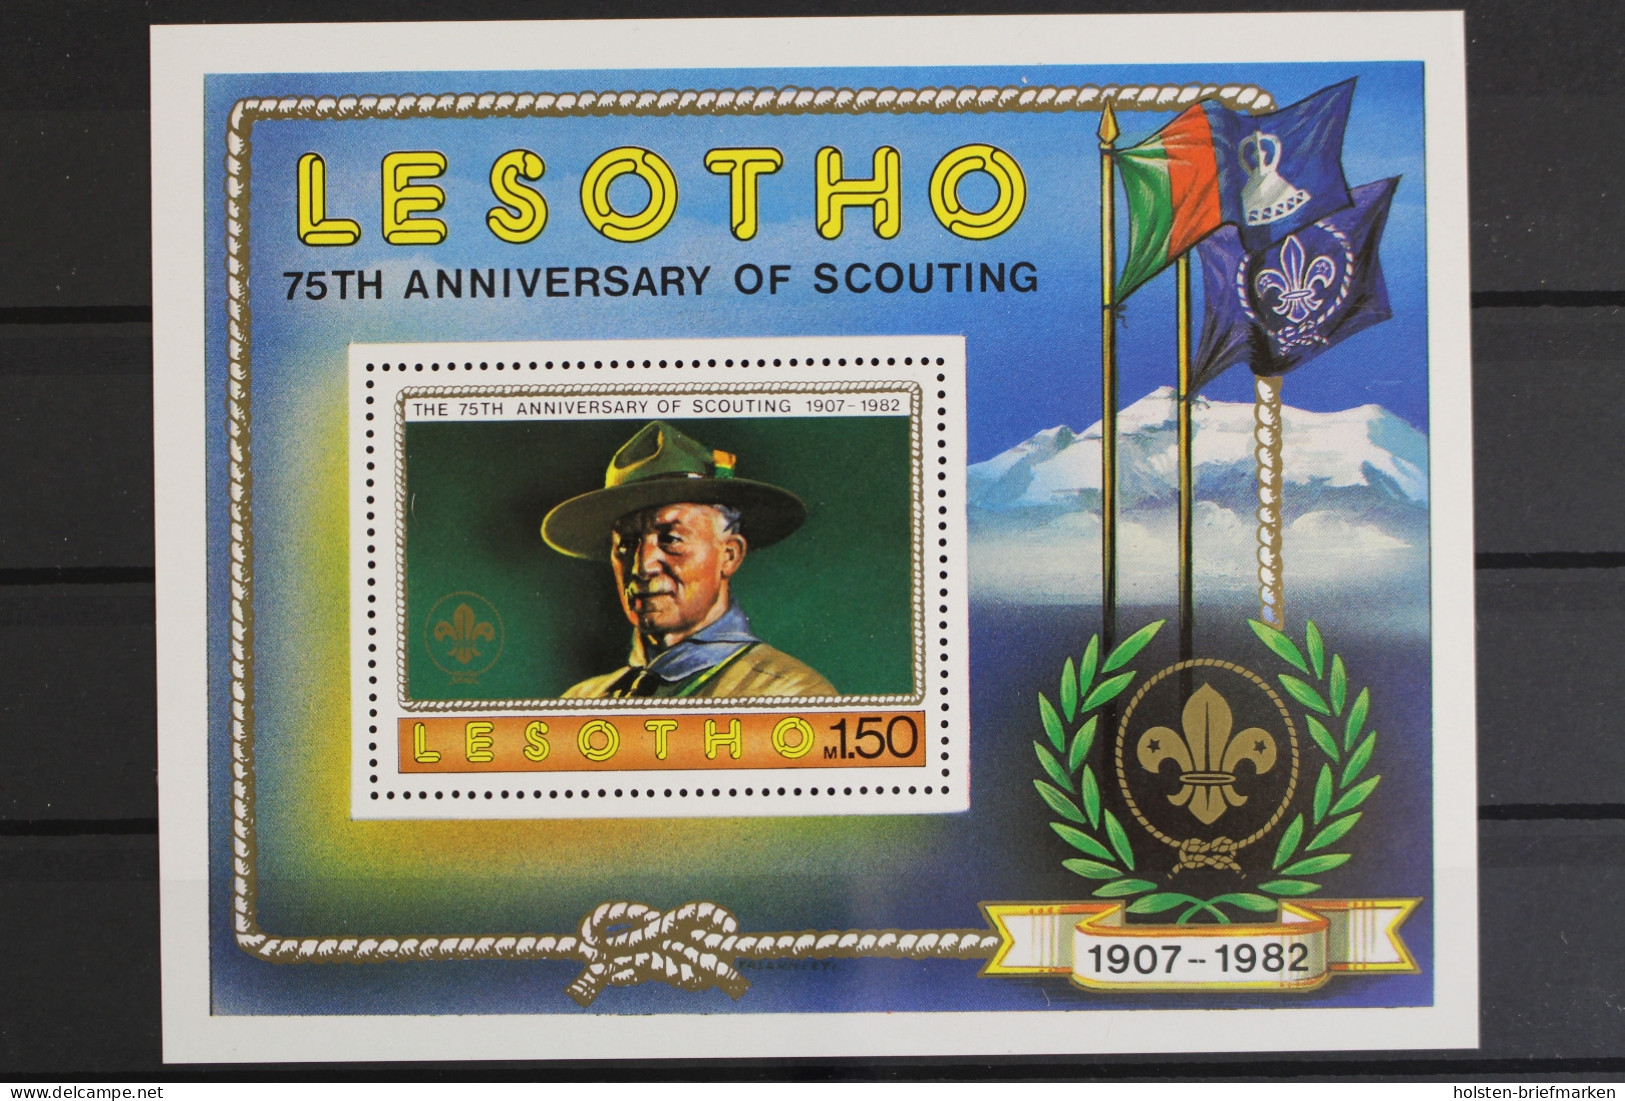 Lesotho, MiNr. Block 13, Postfrisch - Lesotho (1966-...)